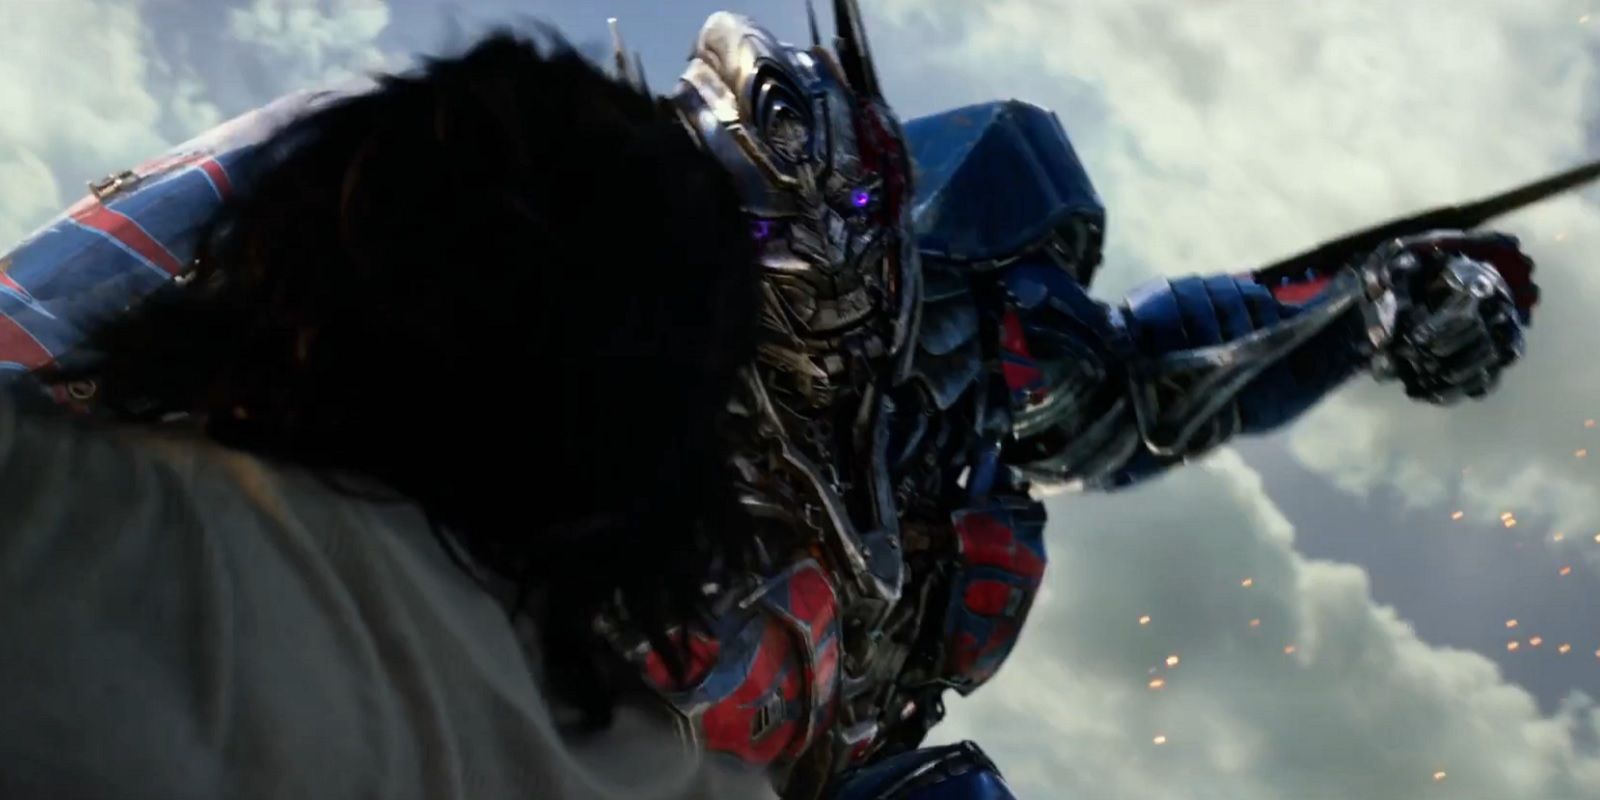 Transformers The Last Knight Trailer - Optimus Prime attacks